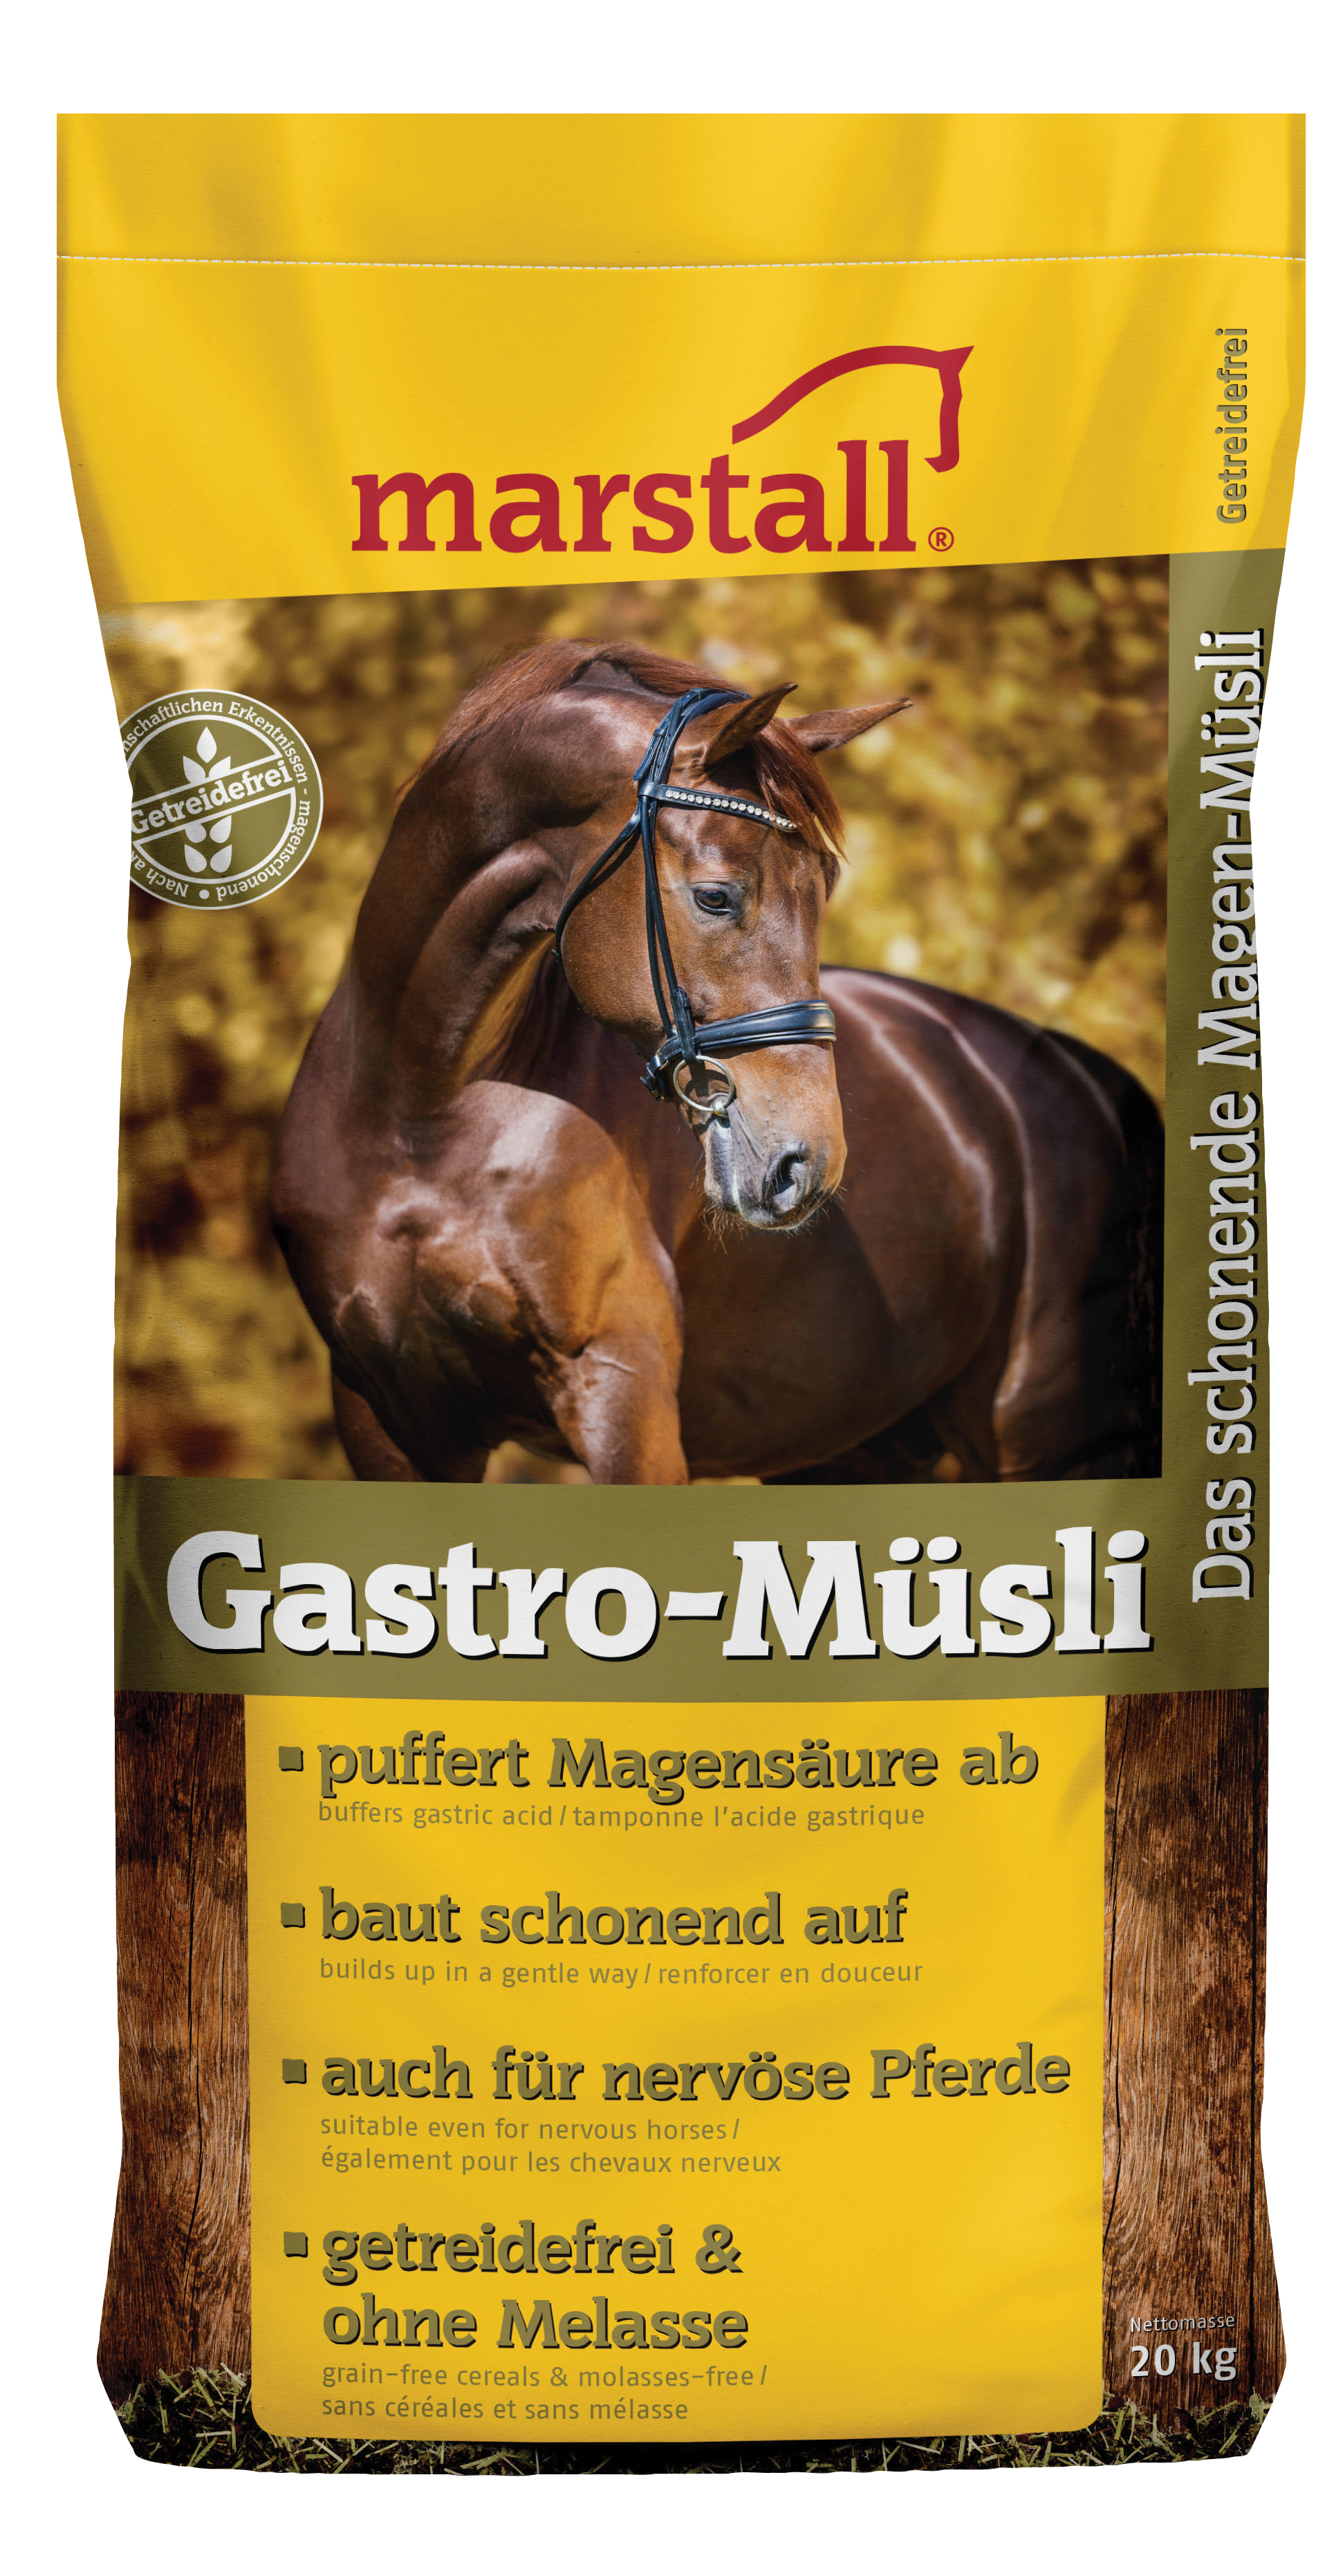 marstall Gastro-Müsli